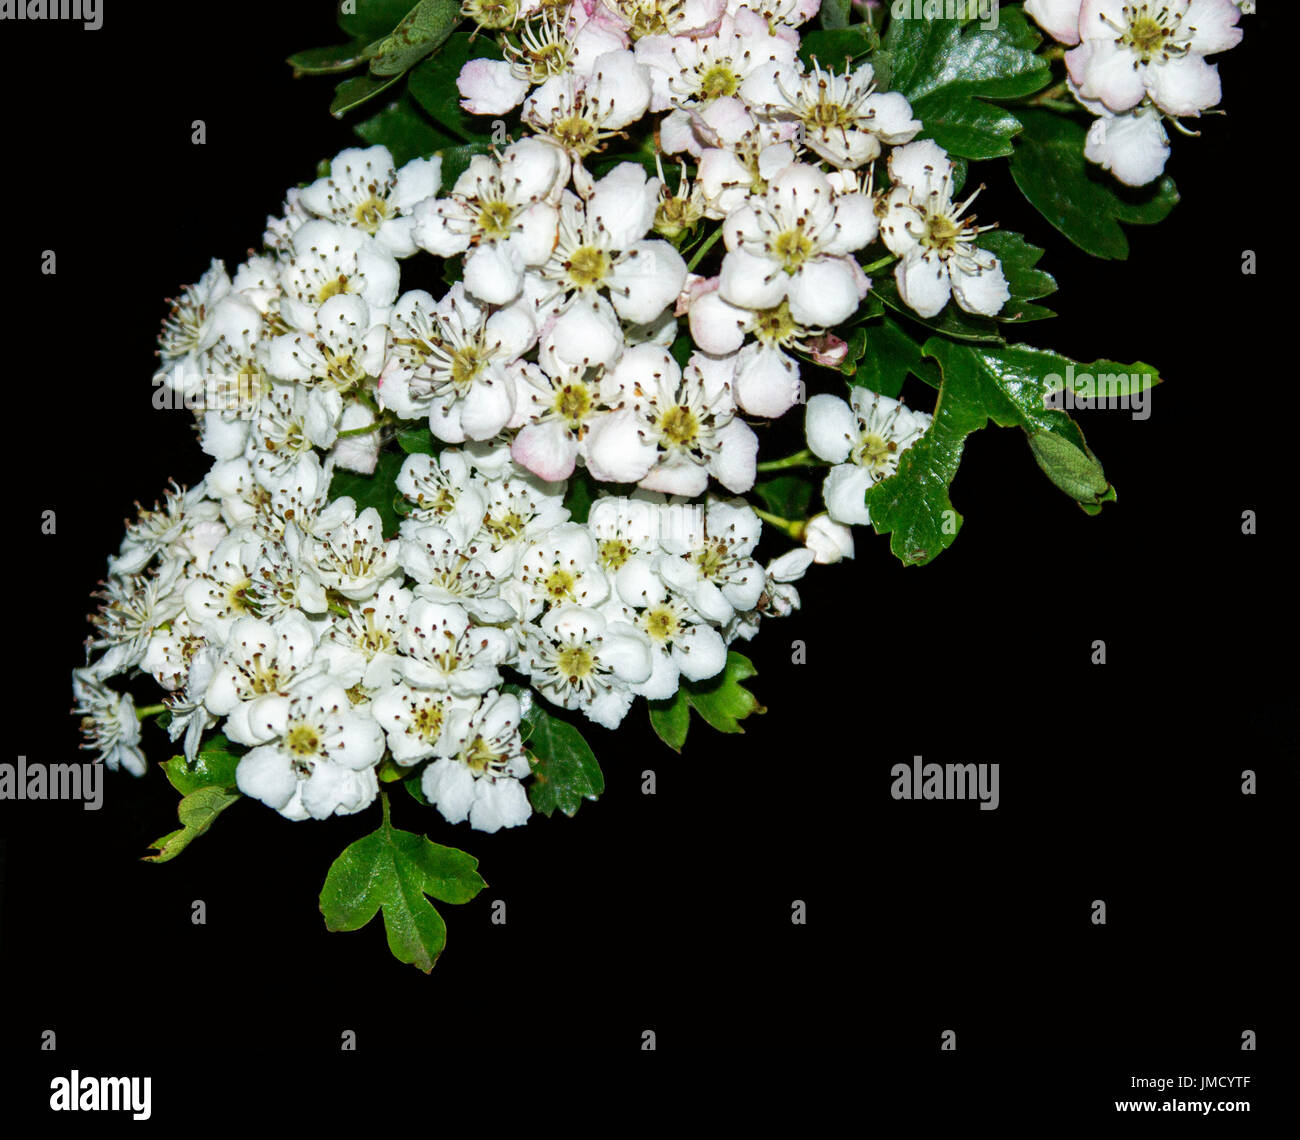 Cluster of perfumed white flowers of Hawthorn, Crataegus monogyna, British wildflowers, against black background Stock Photo